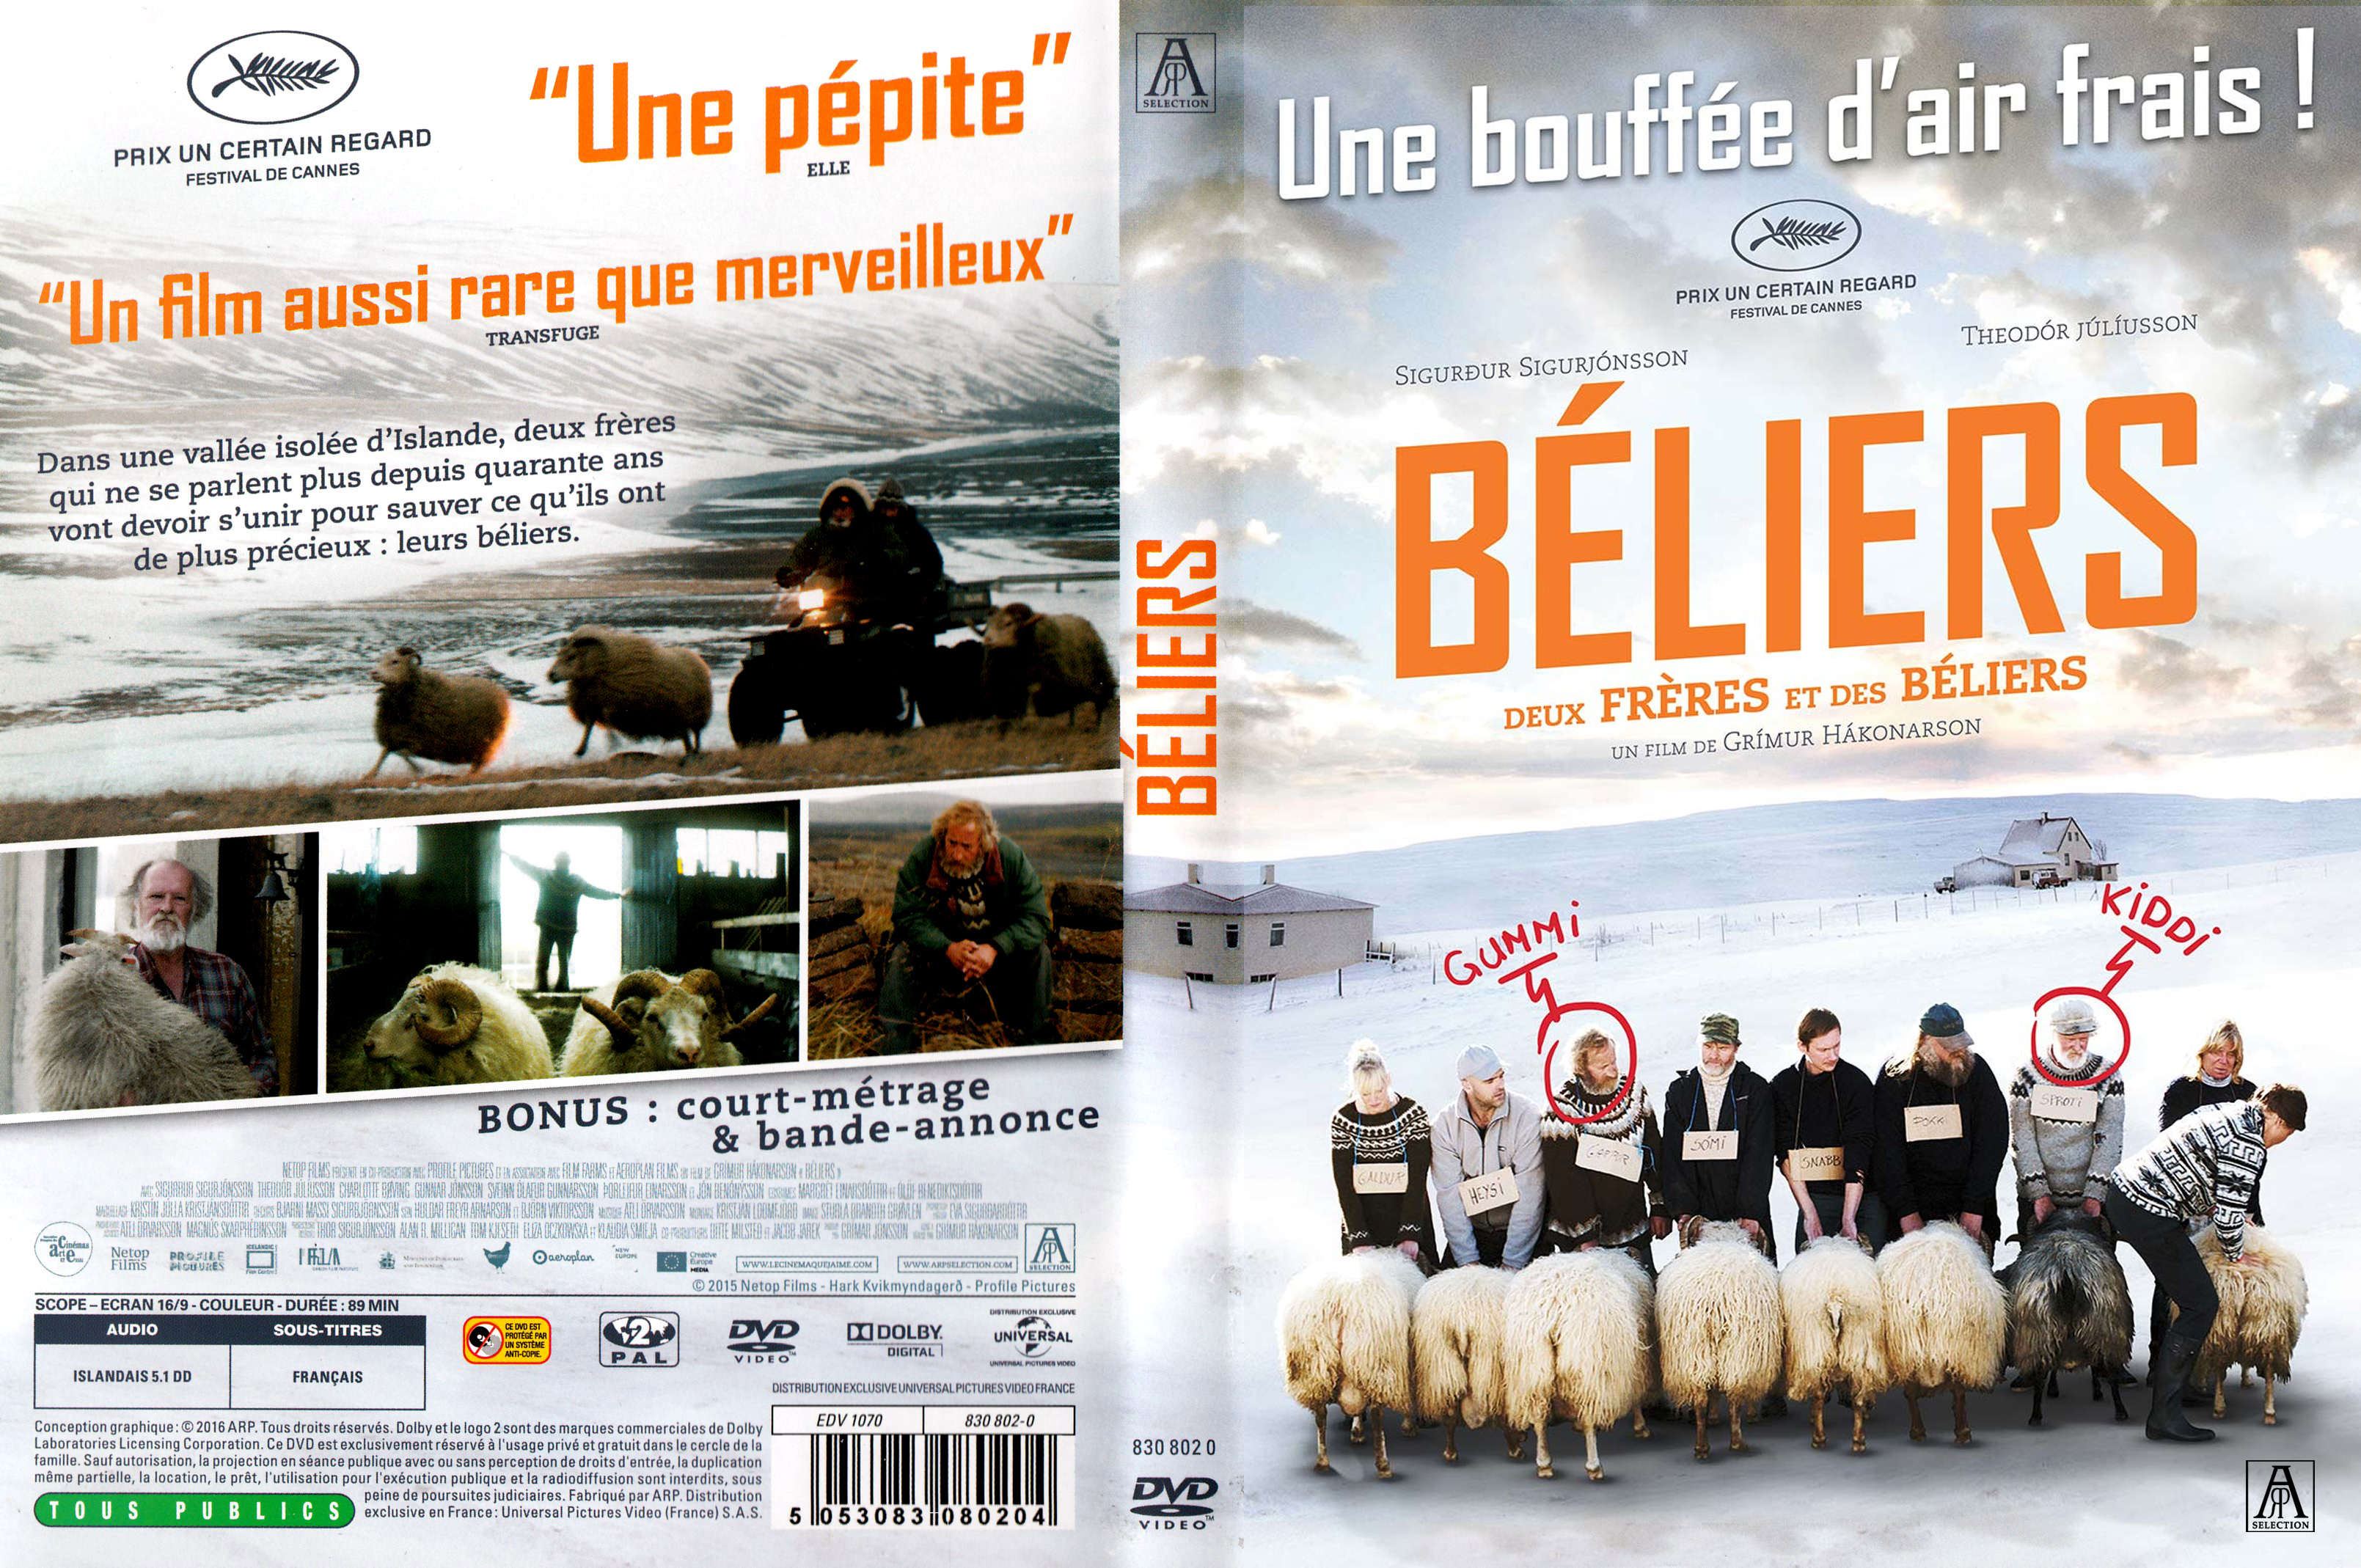 Jaquette DVD Bliers